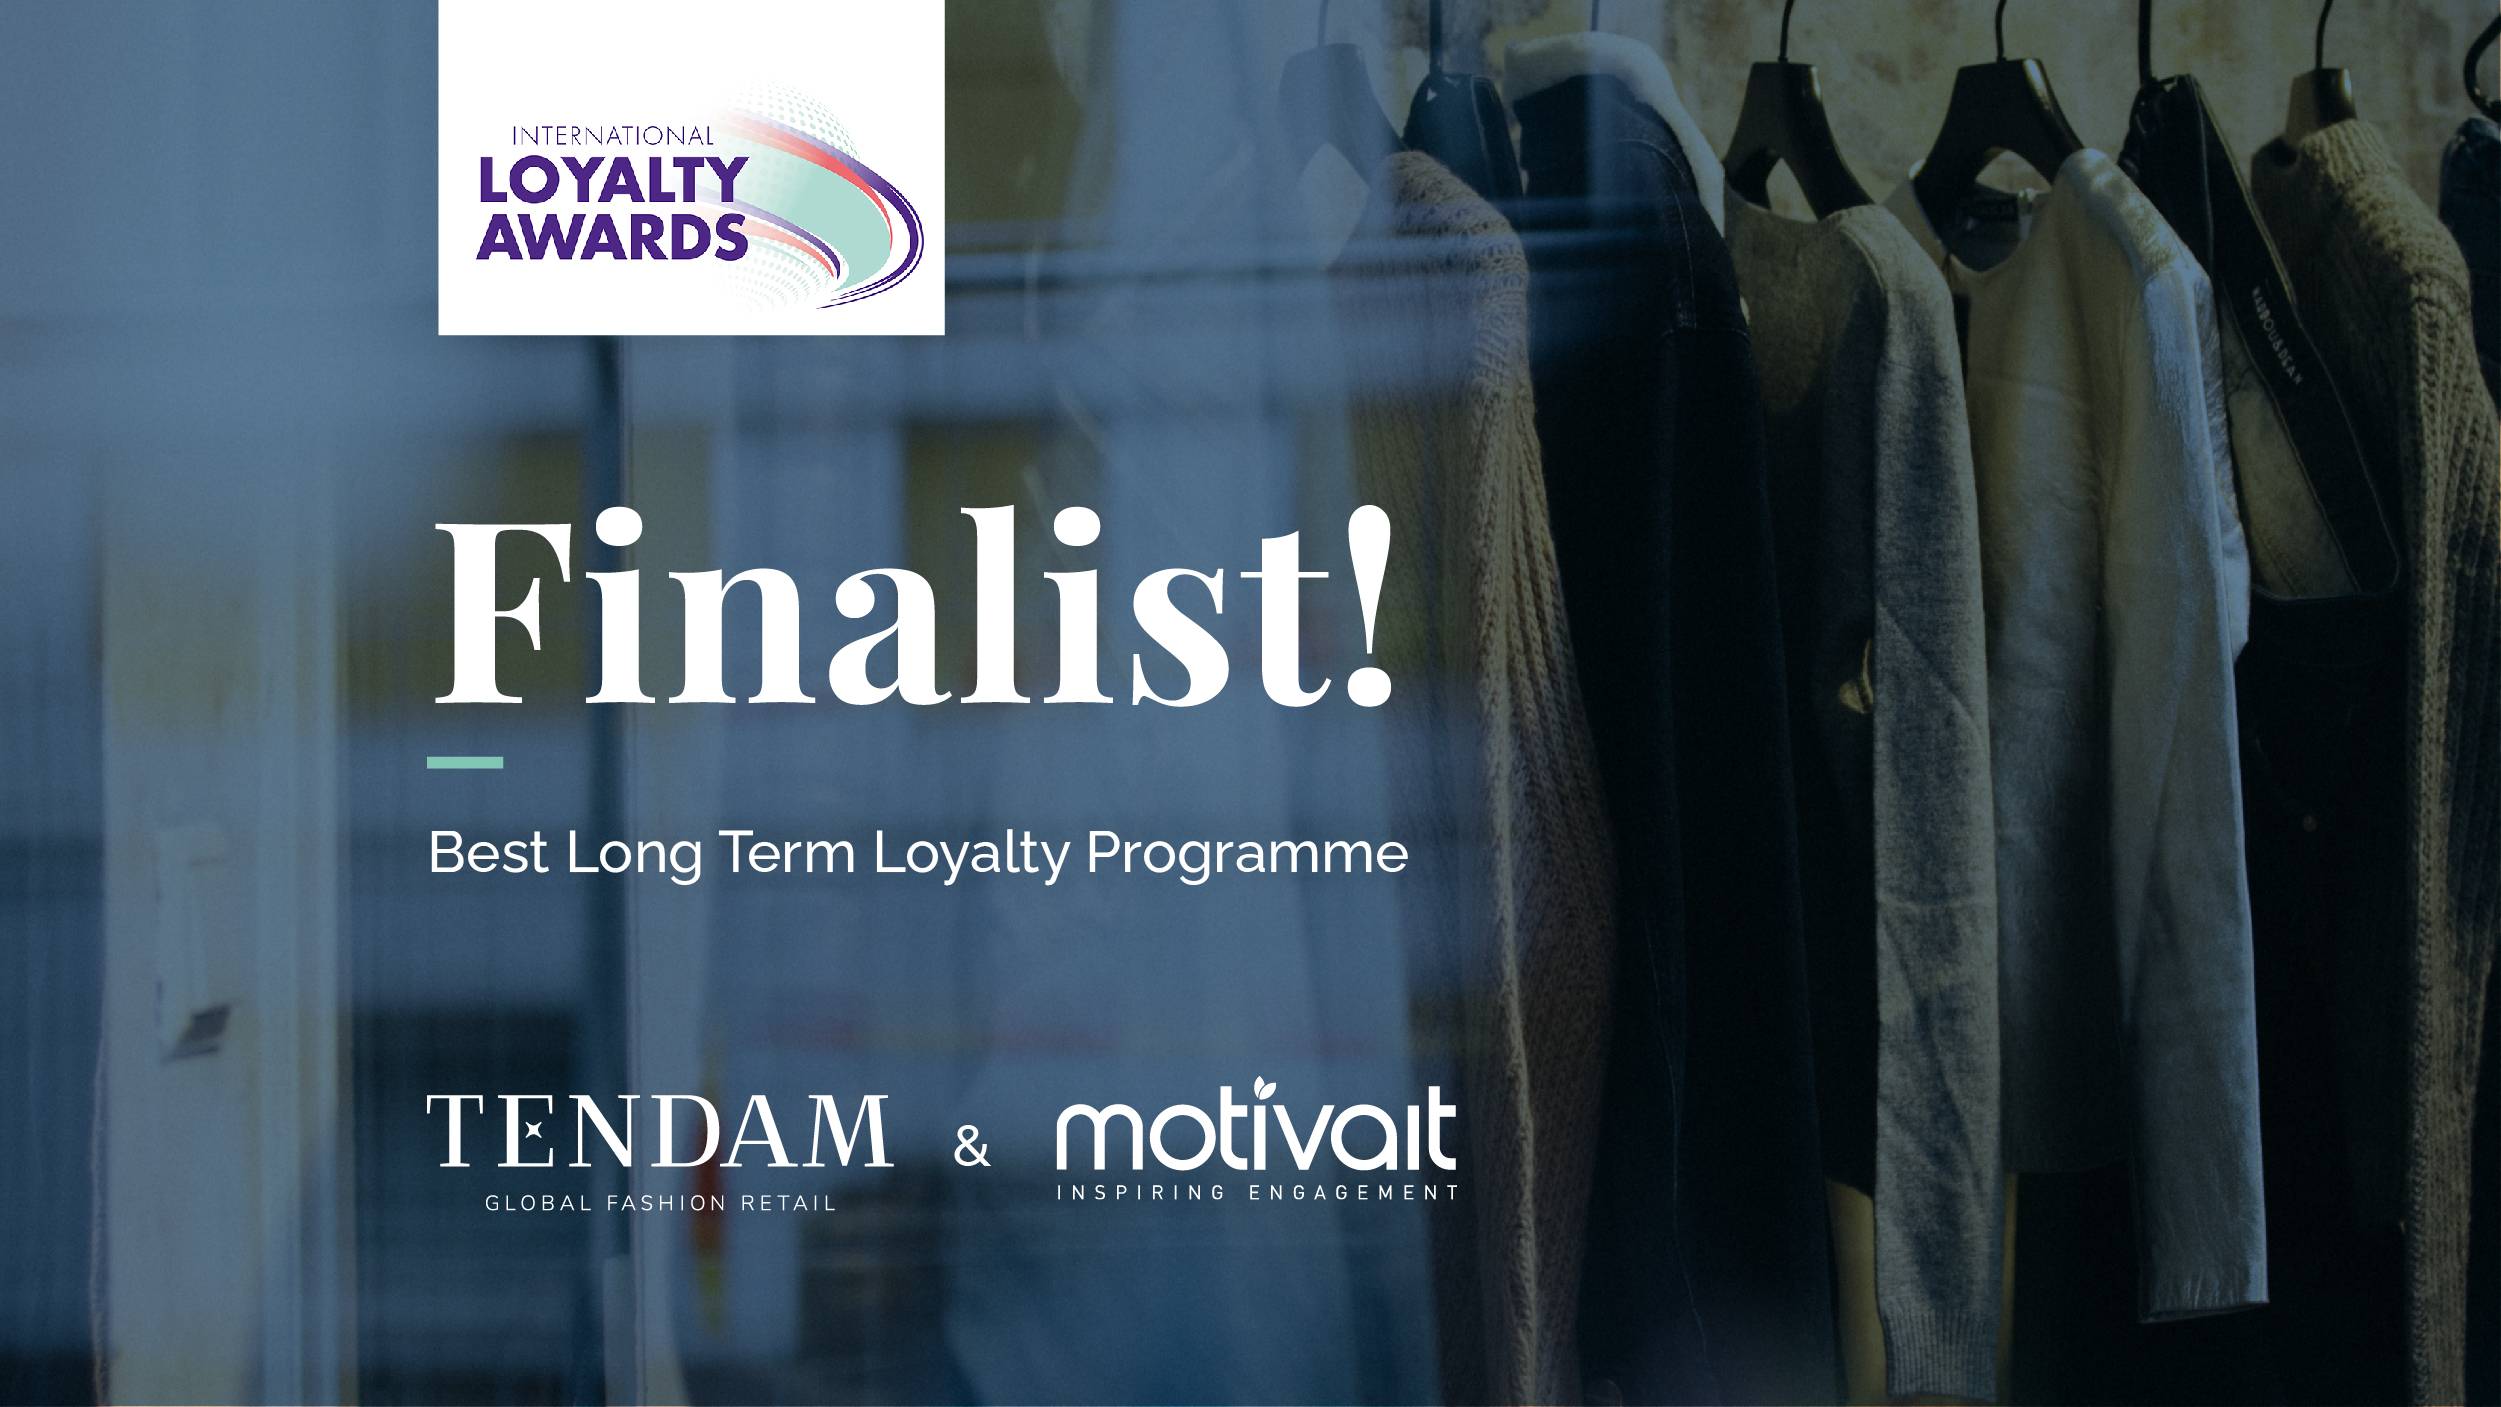 Motivait Tendam International Loyalty awards nomination